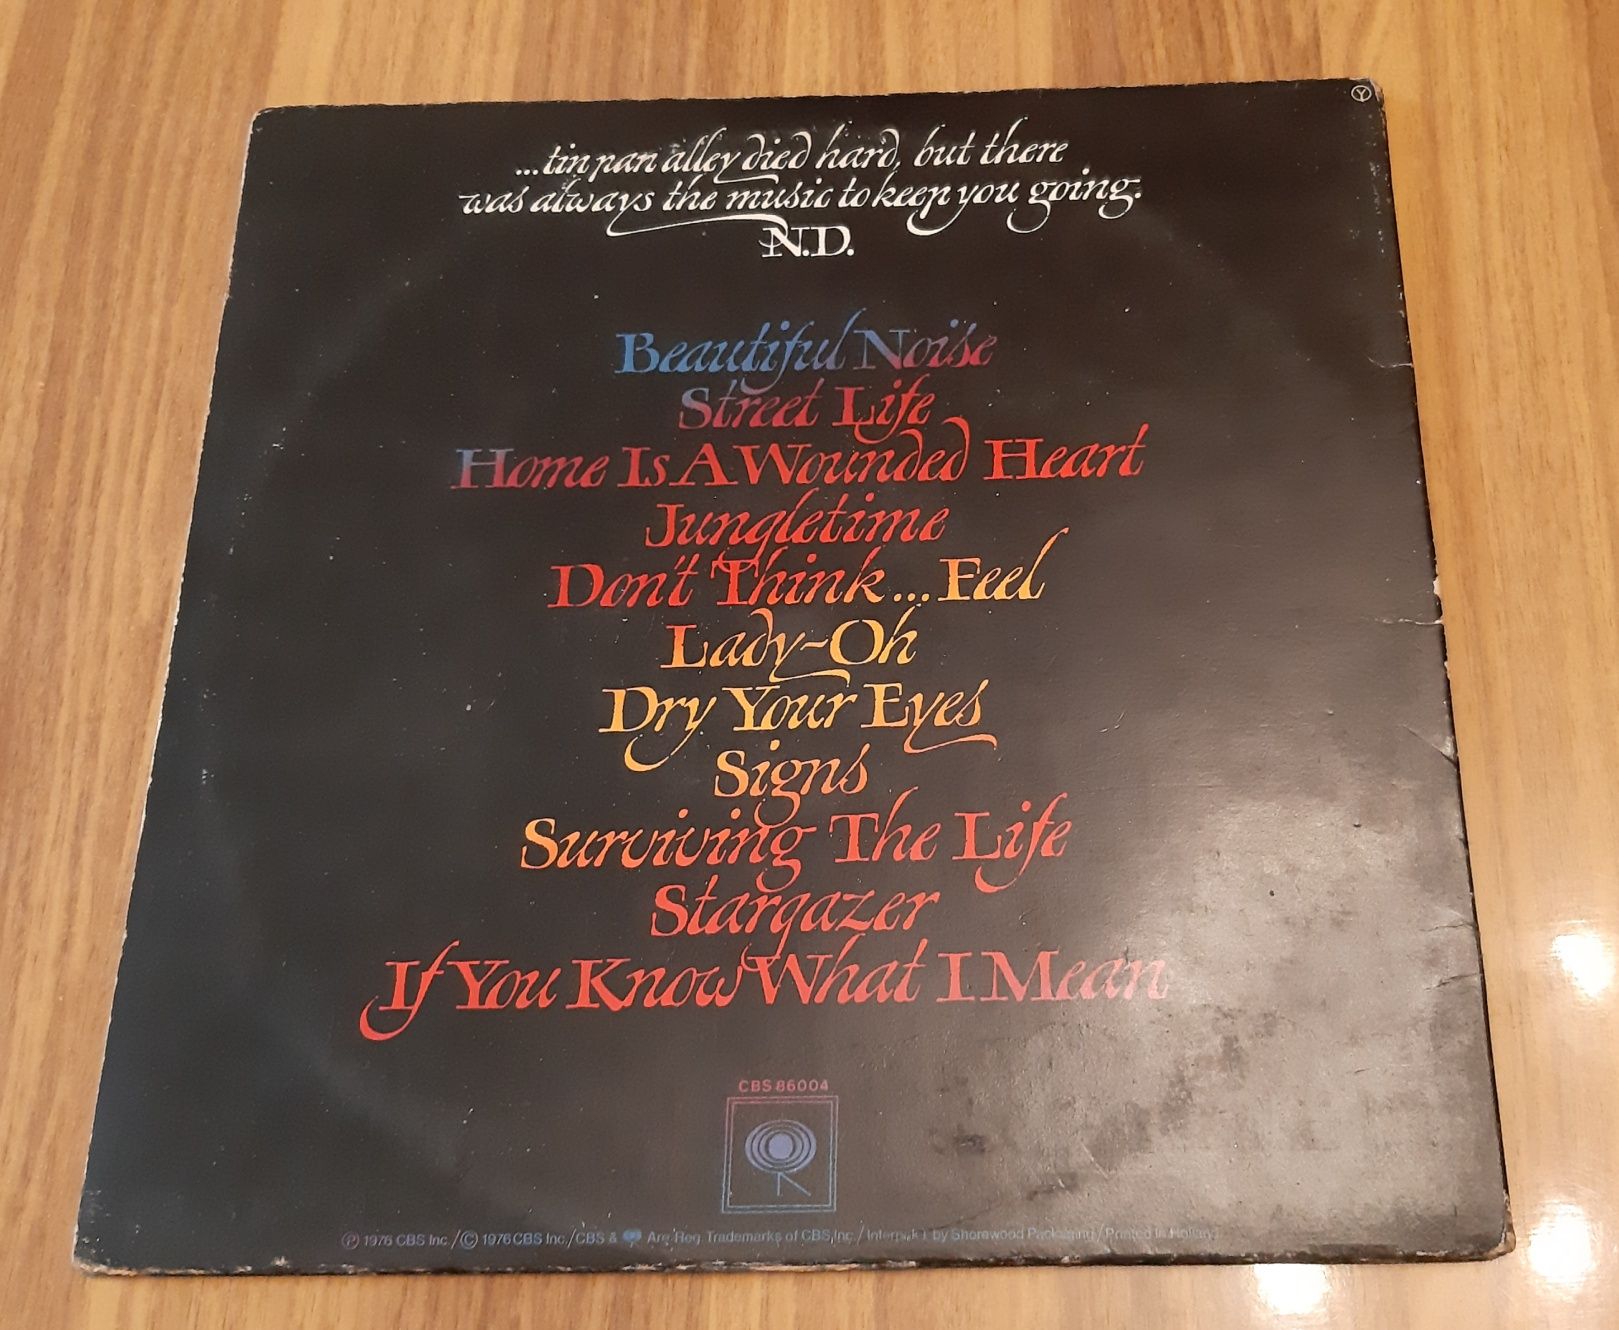 Neil Diamond - Beautiful Noise Платівка